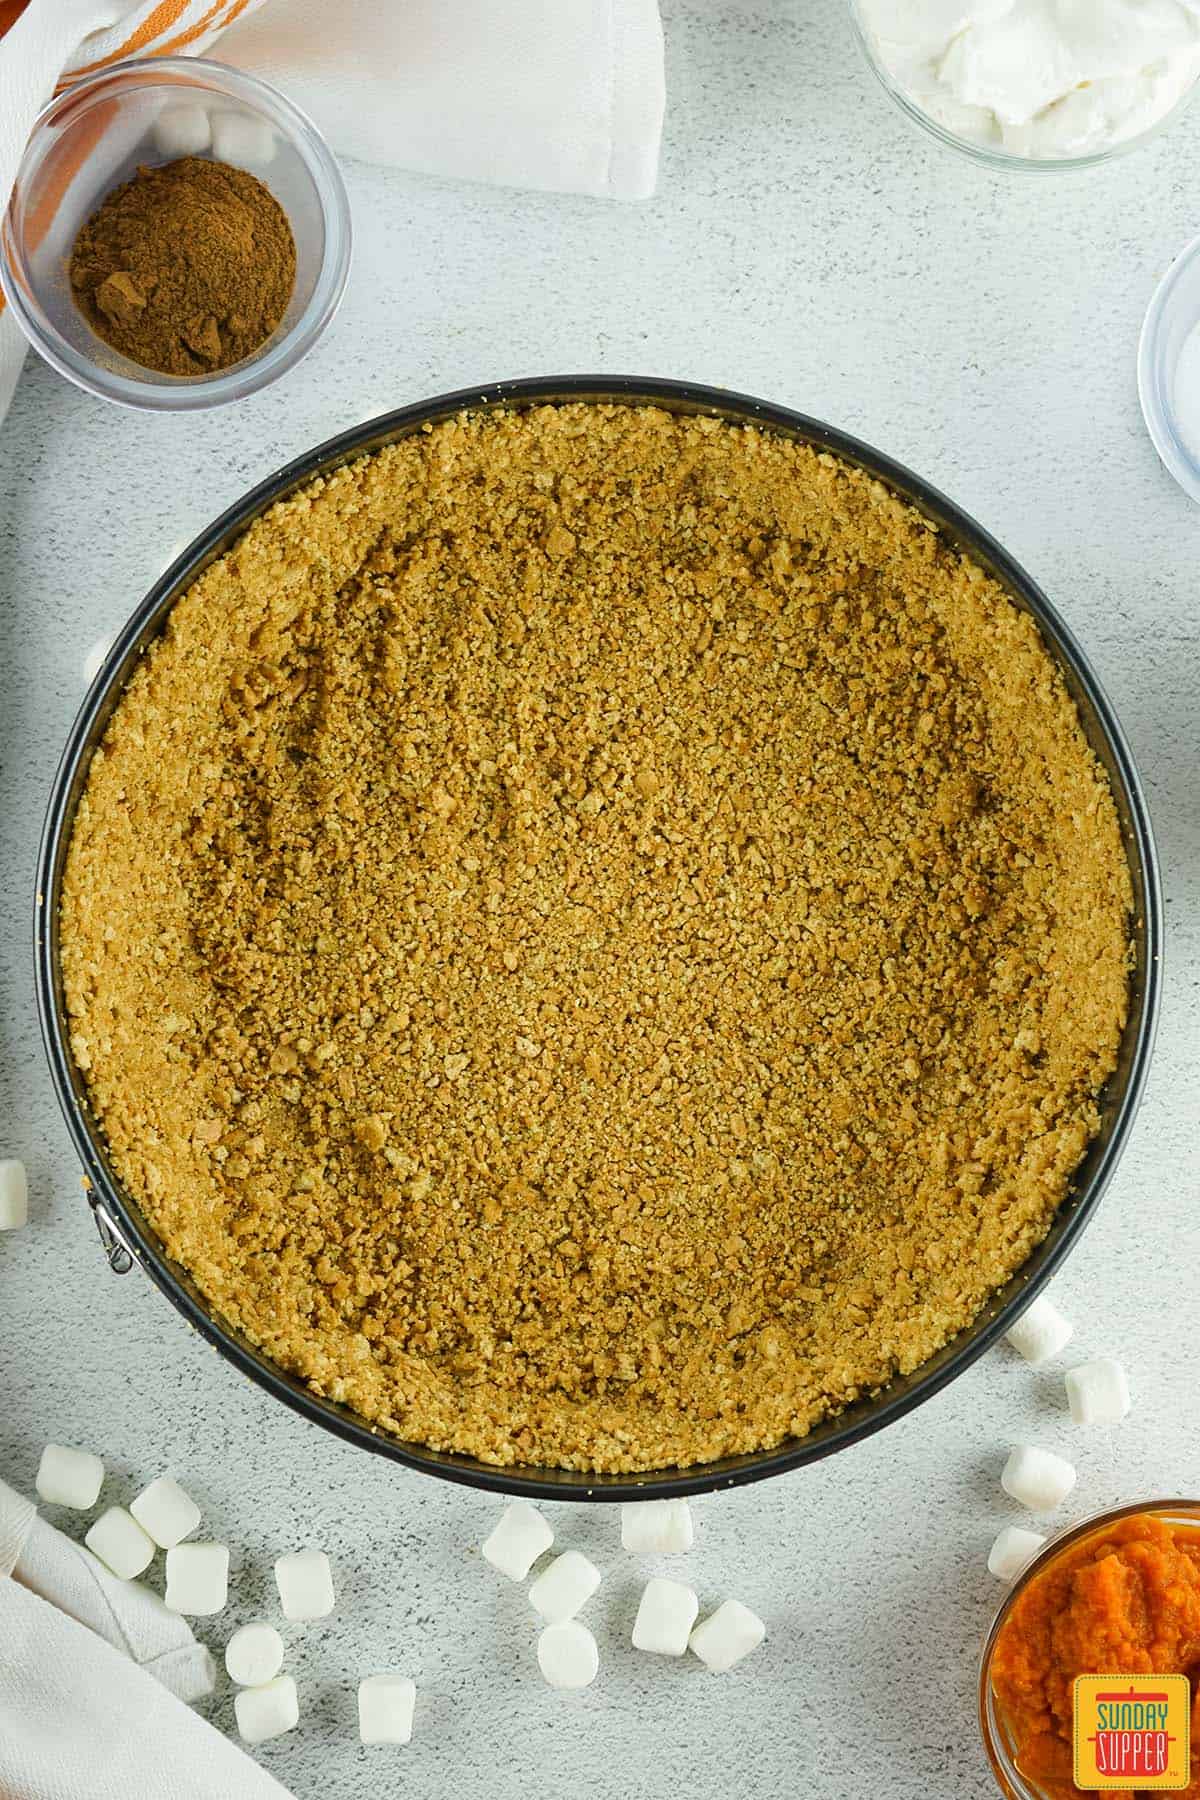 graham cracker crust placed in springform pan